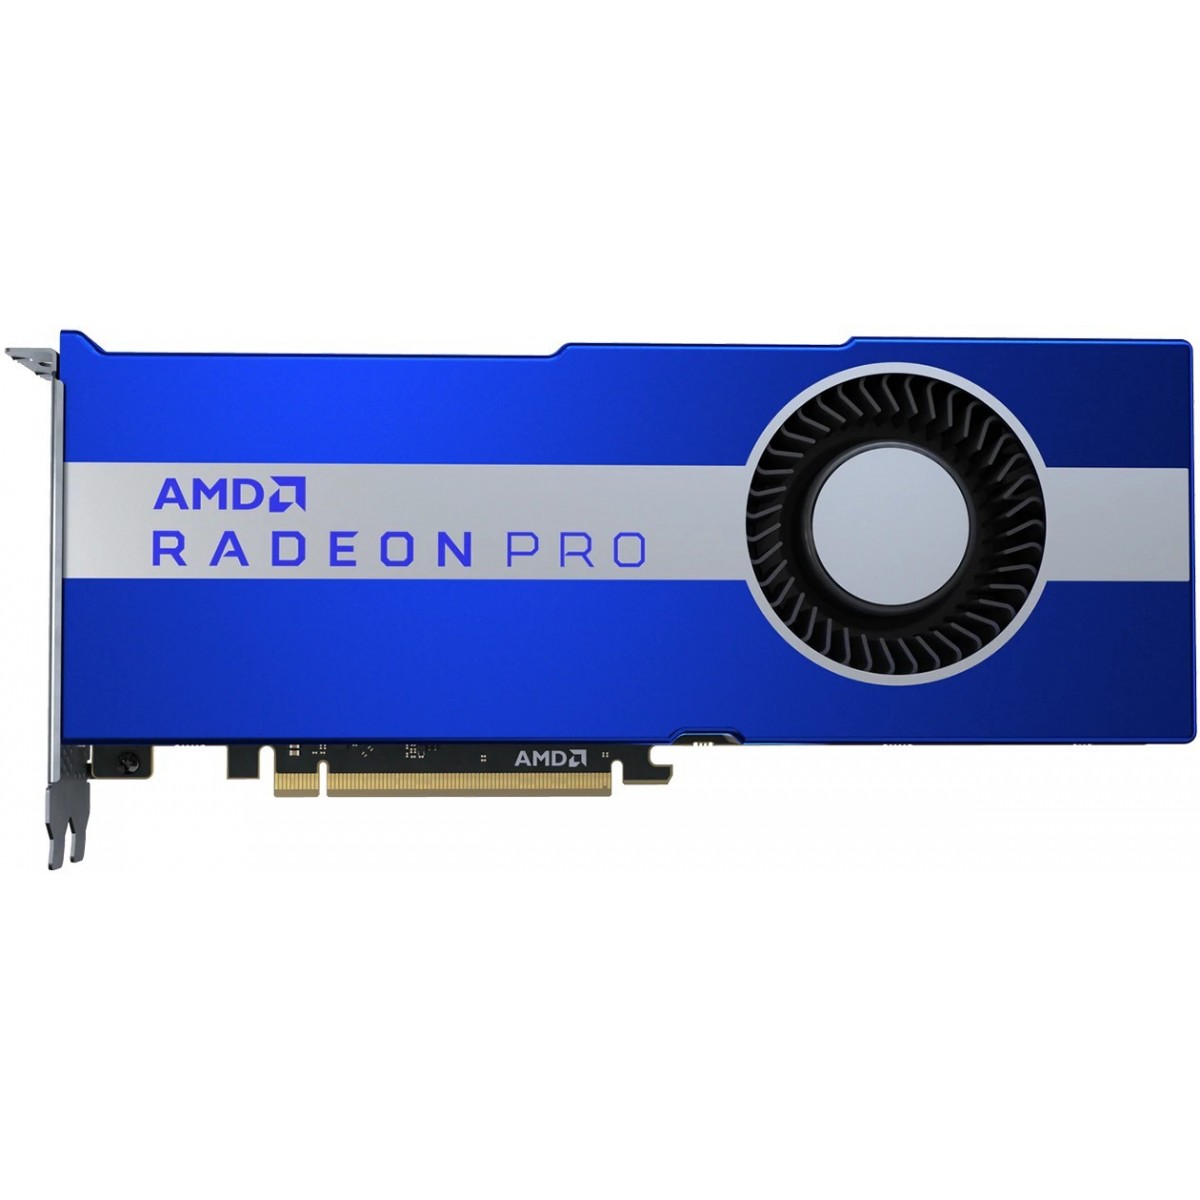 AMD Radeon Pro VII - Radeon Pro VII - 16 GB - High Bandwidth Memory 2 (HBM2) - 4096 bit - 7680 x 4320 pixels - PCI Express x16 4